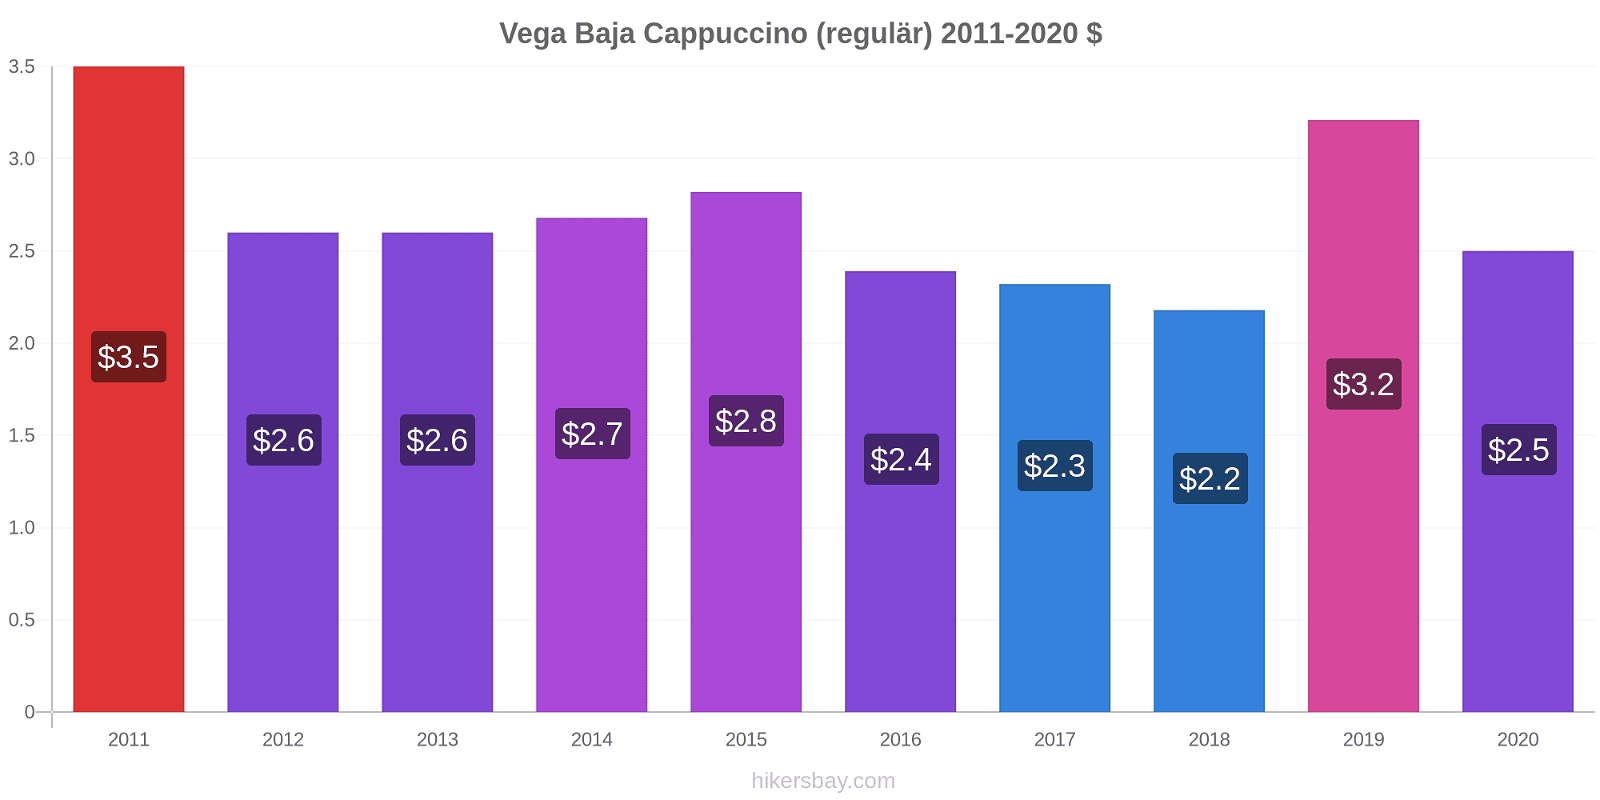 Vega Baja Preisänderungen Cappuccino (regulär) hikersbay.com